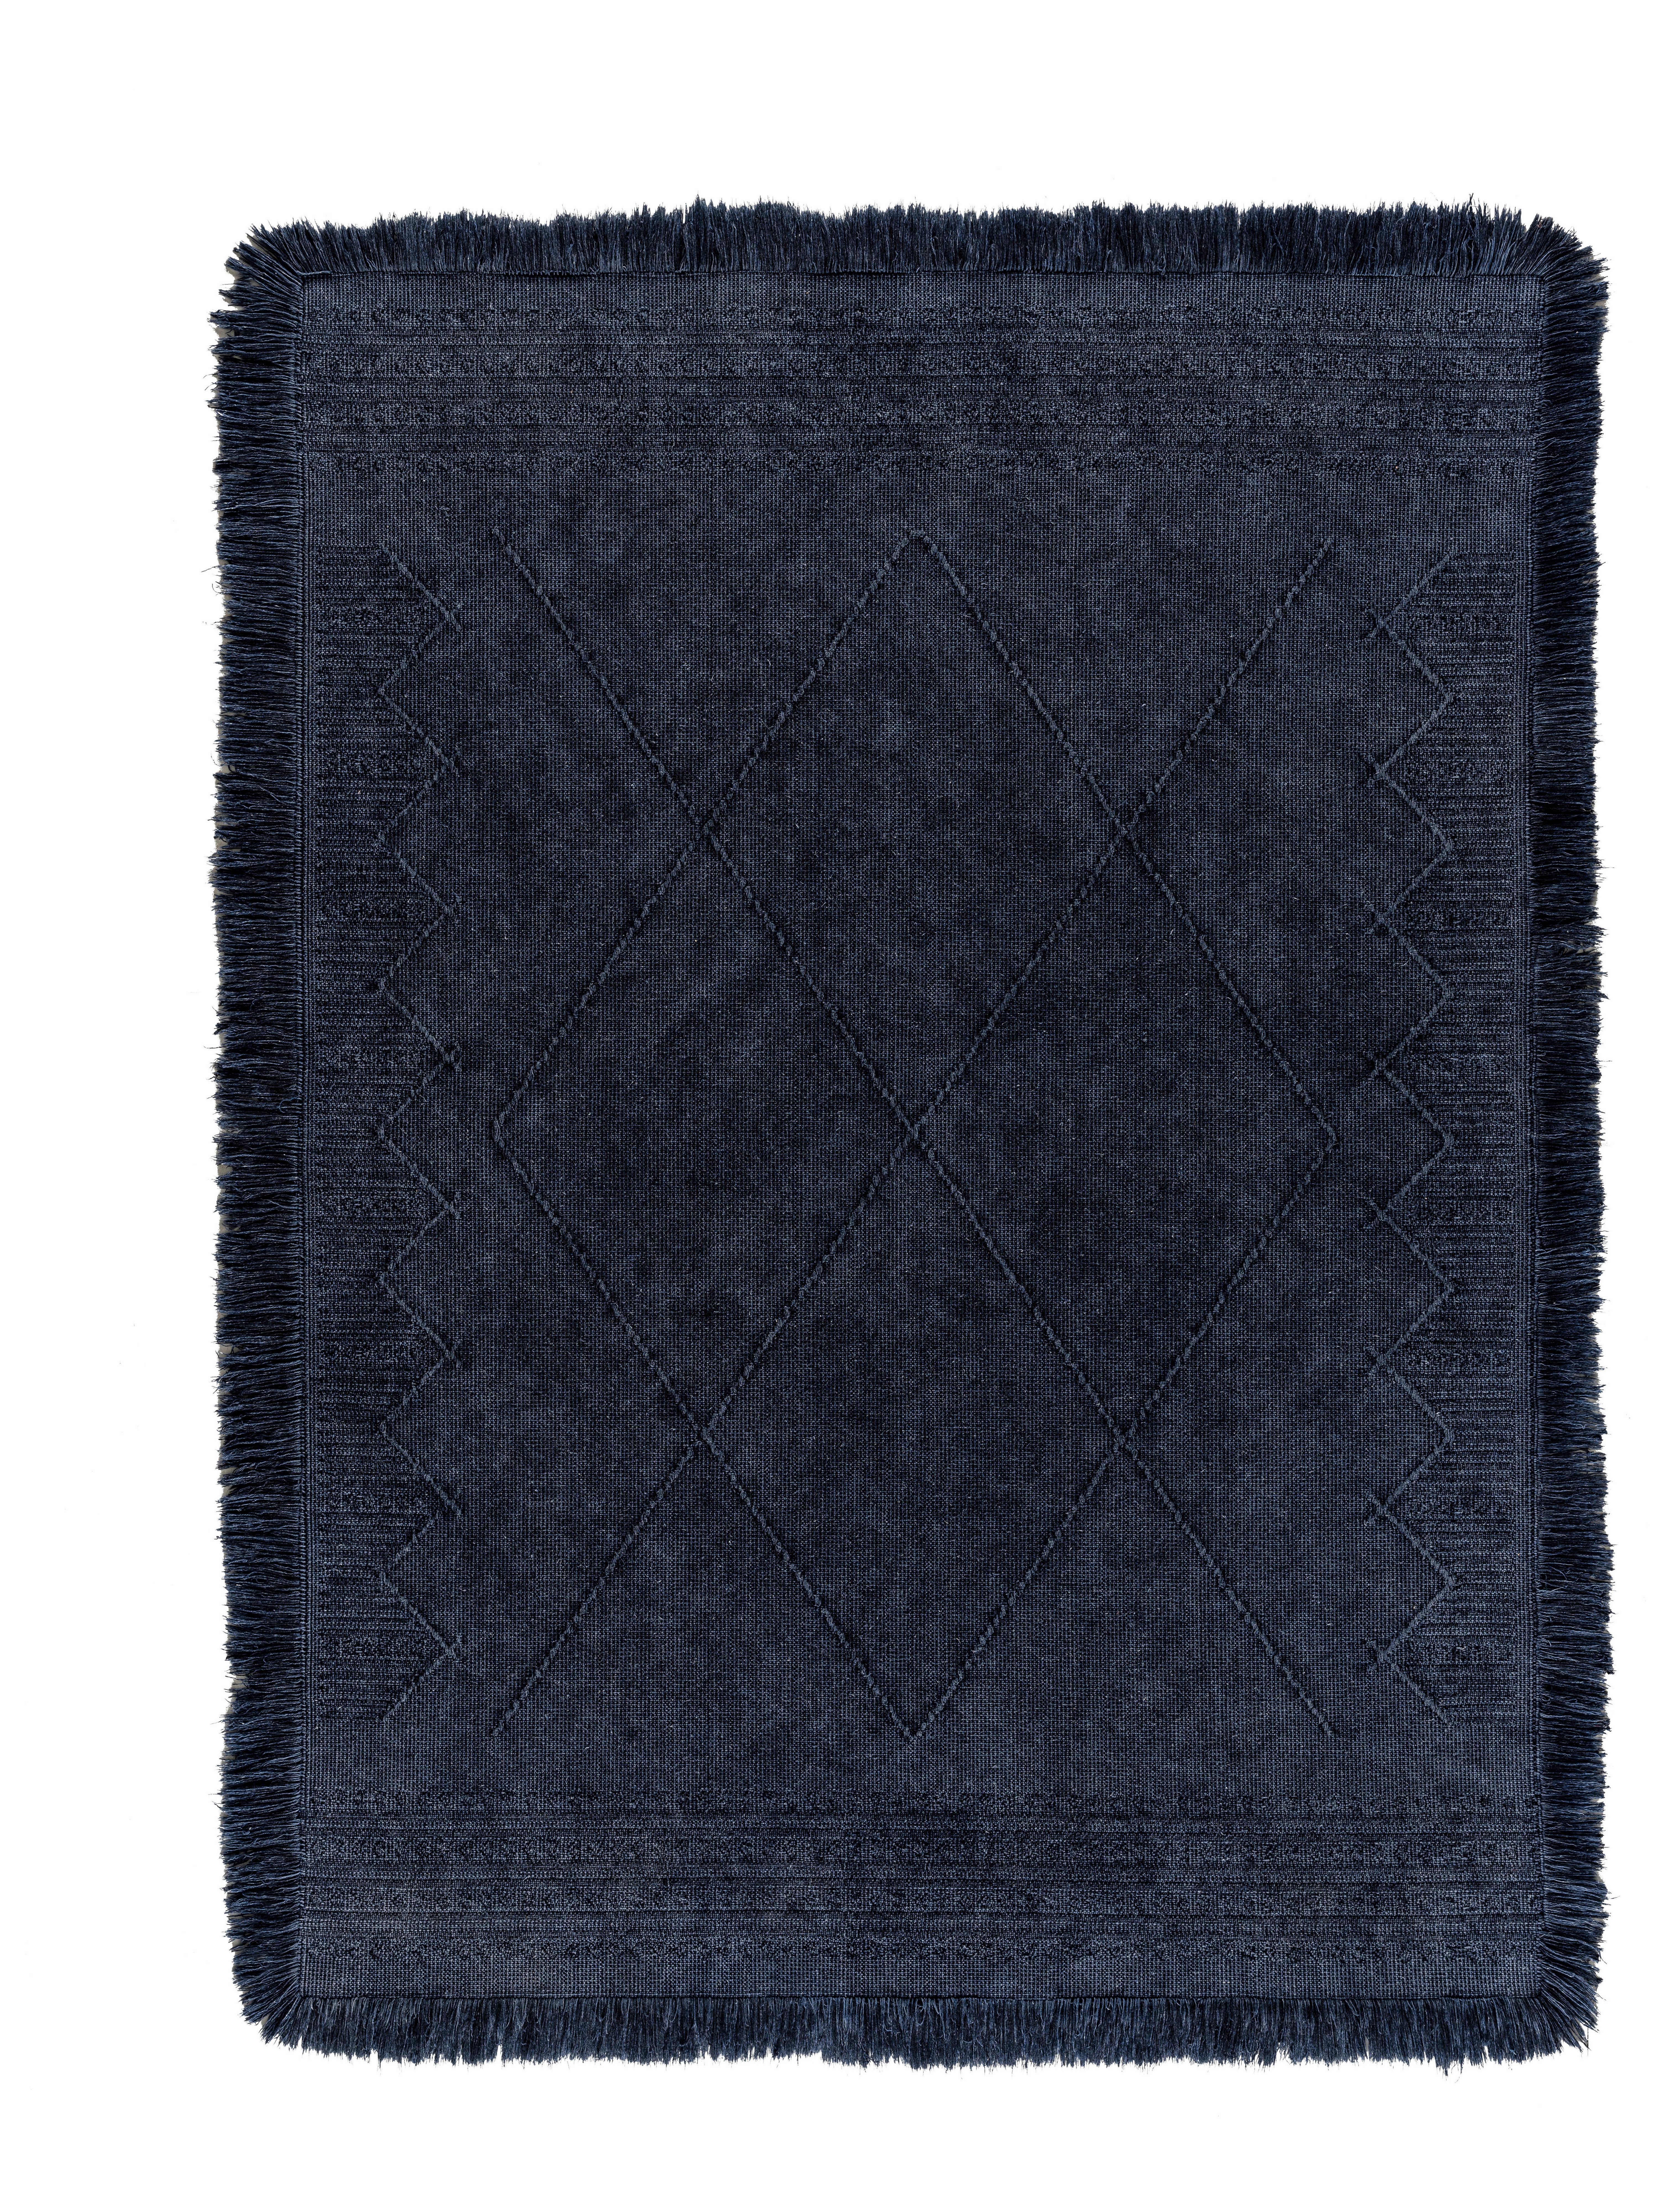 Ručno Tkani Tepih Monaco 1 - tamno plava, tekstil (80/150cm) - Modern Living